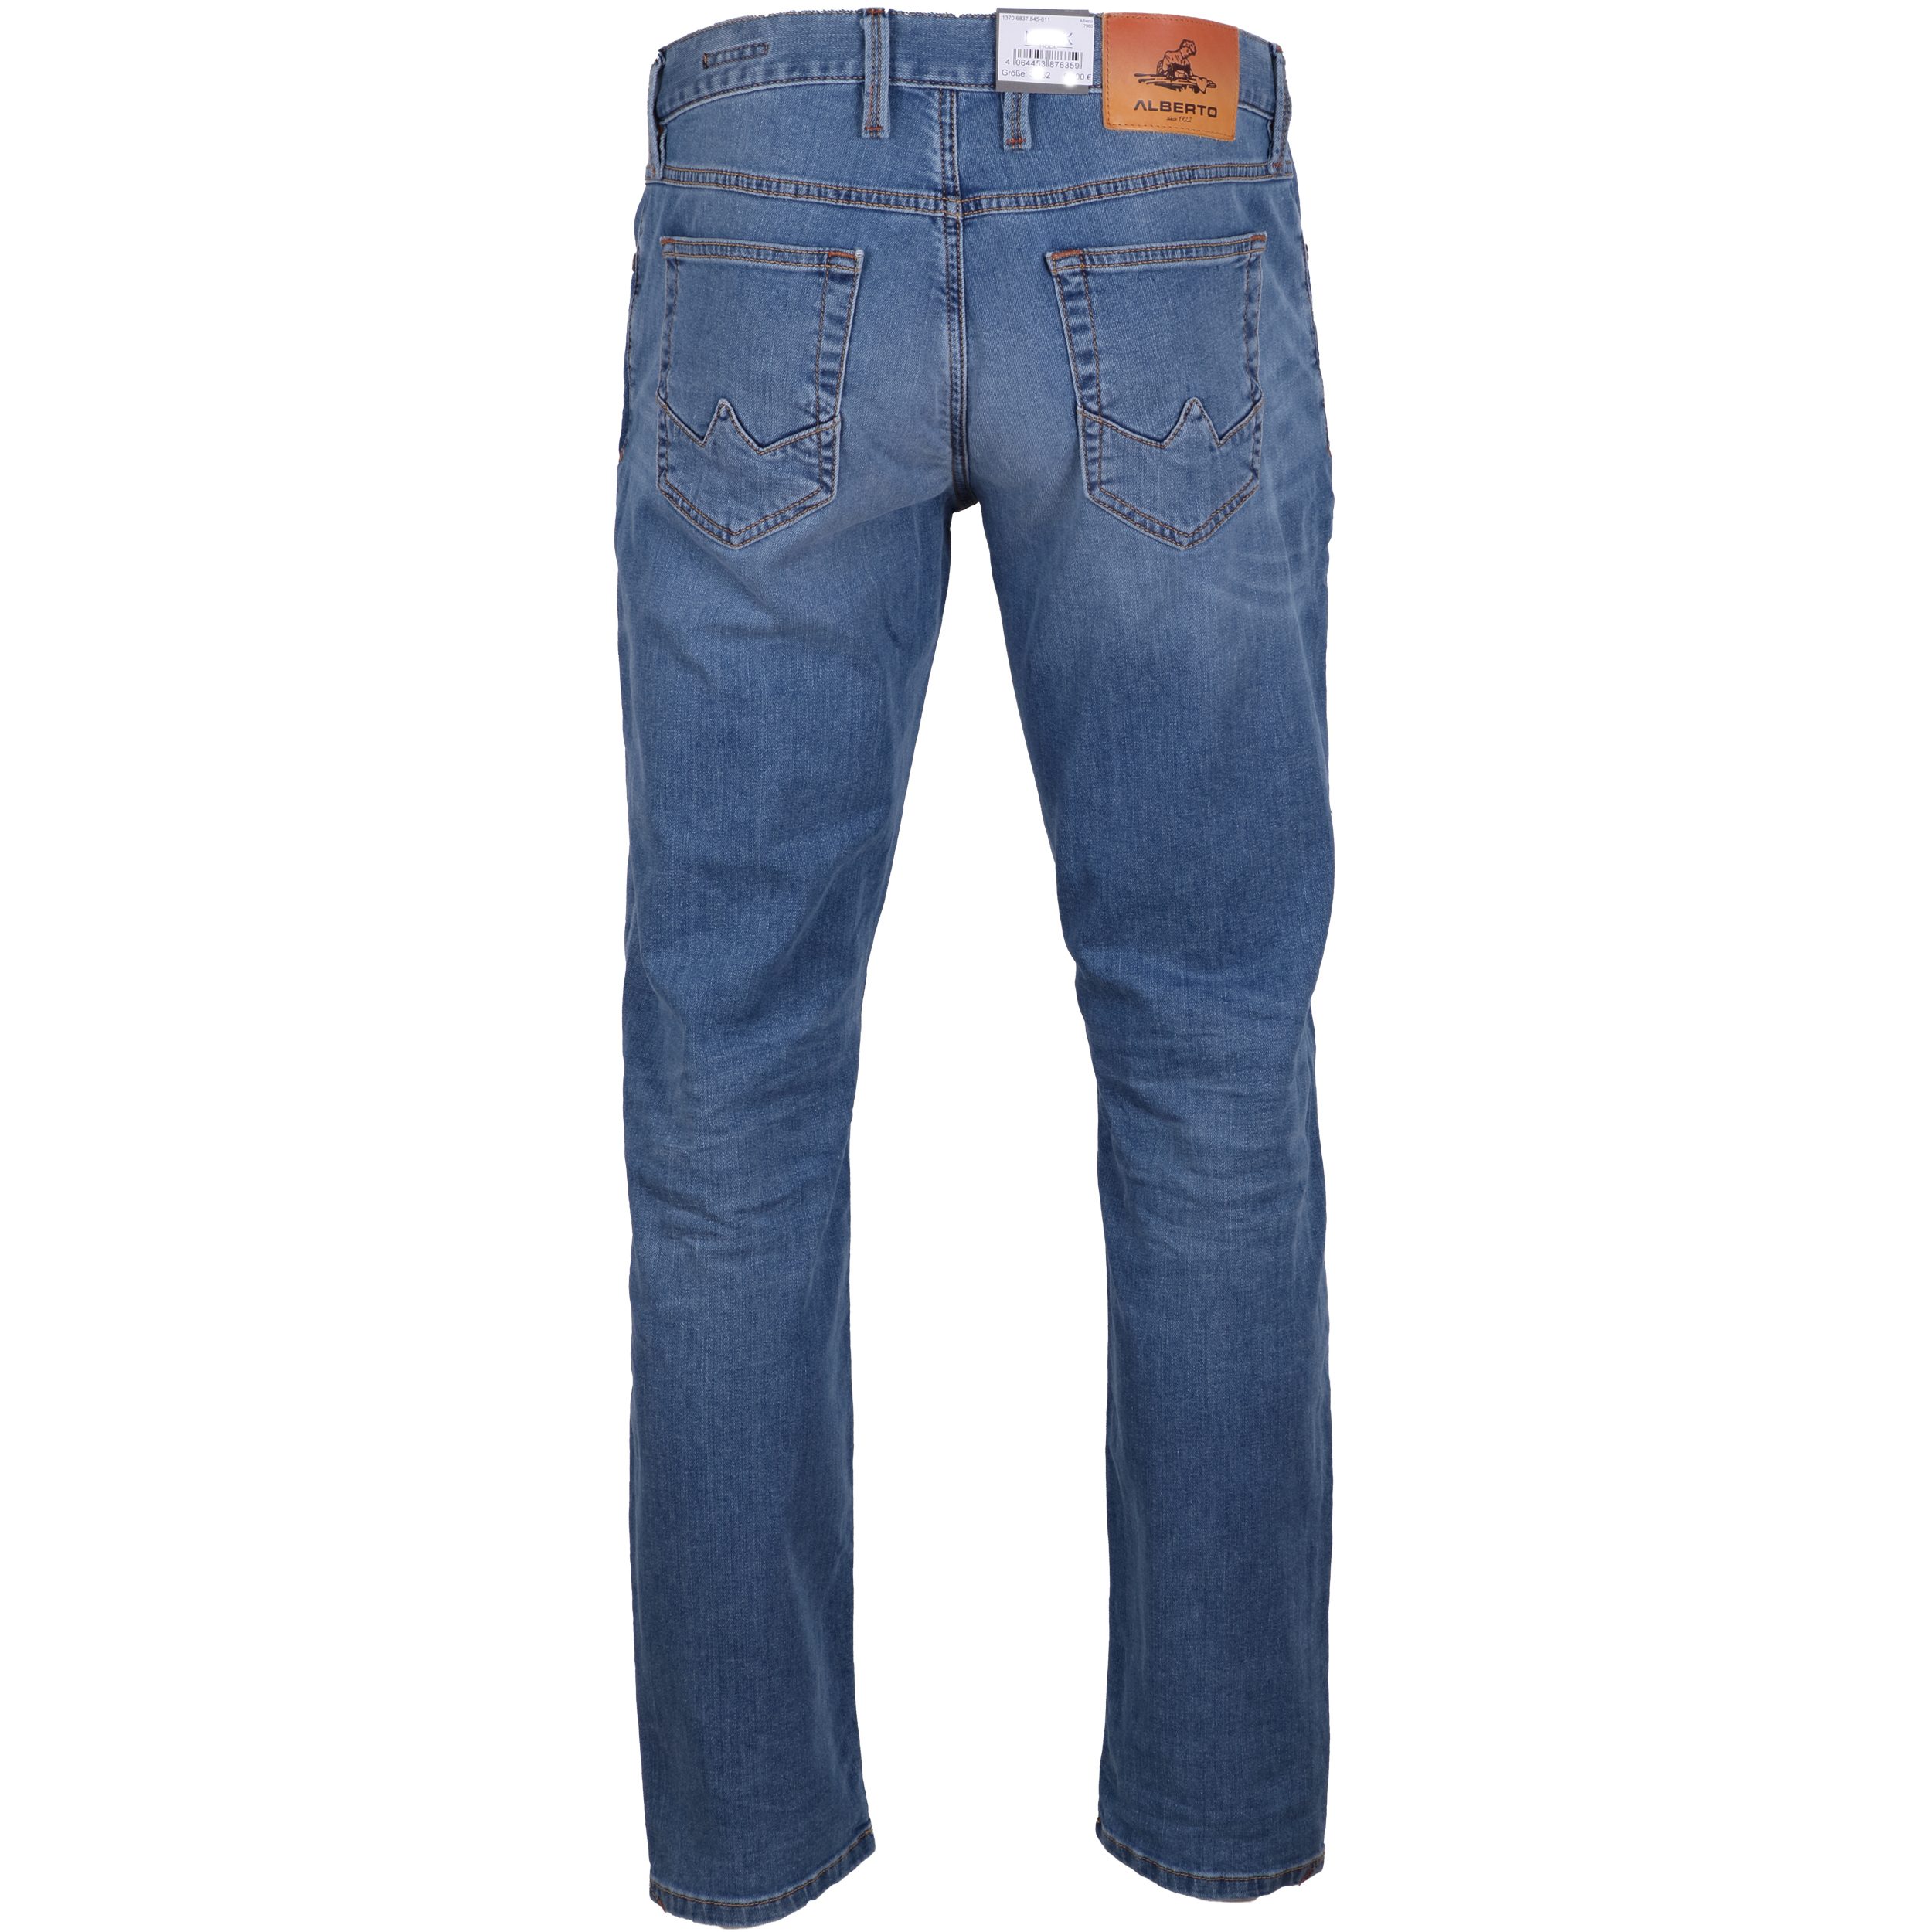 Alberto Herren Jeans Slipe tapered fit - hellblau 30/34